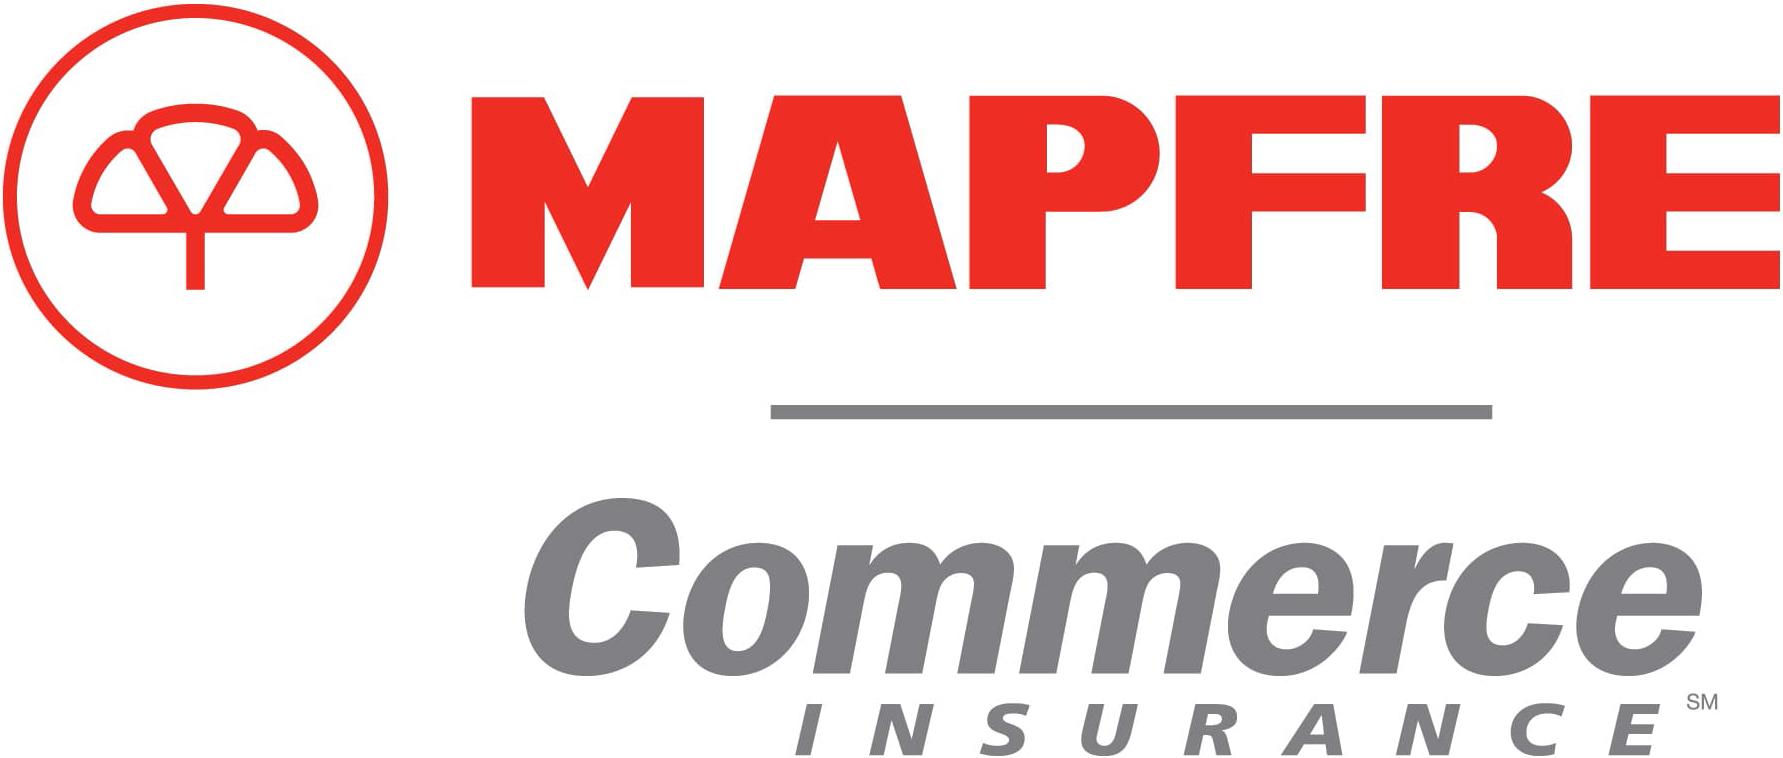 Mapfre Logo - Commerce Mapfre Insurance Logo Insurance & Financial Services